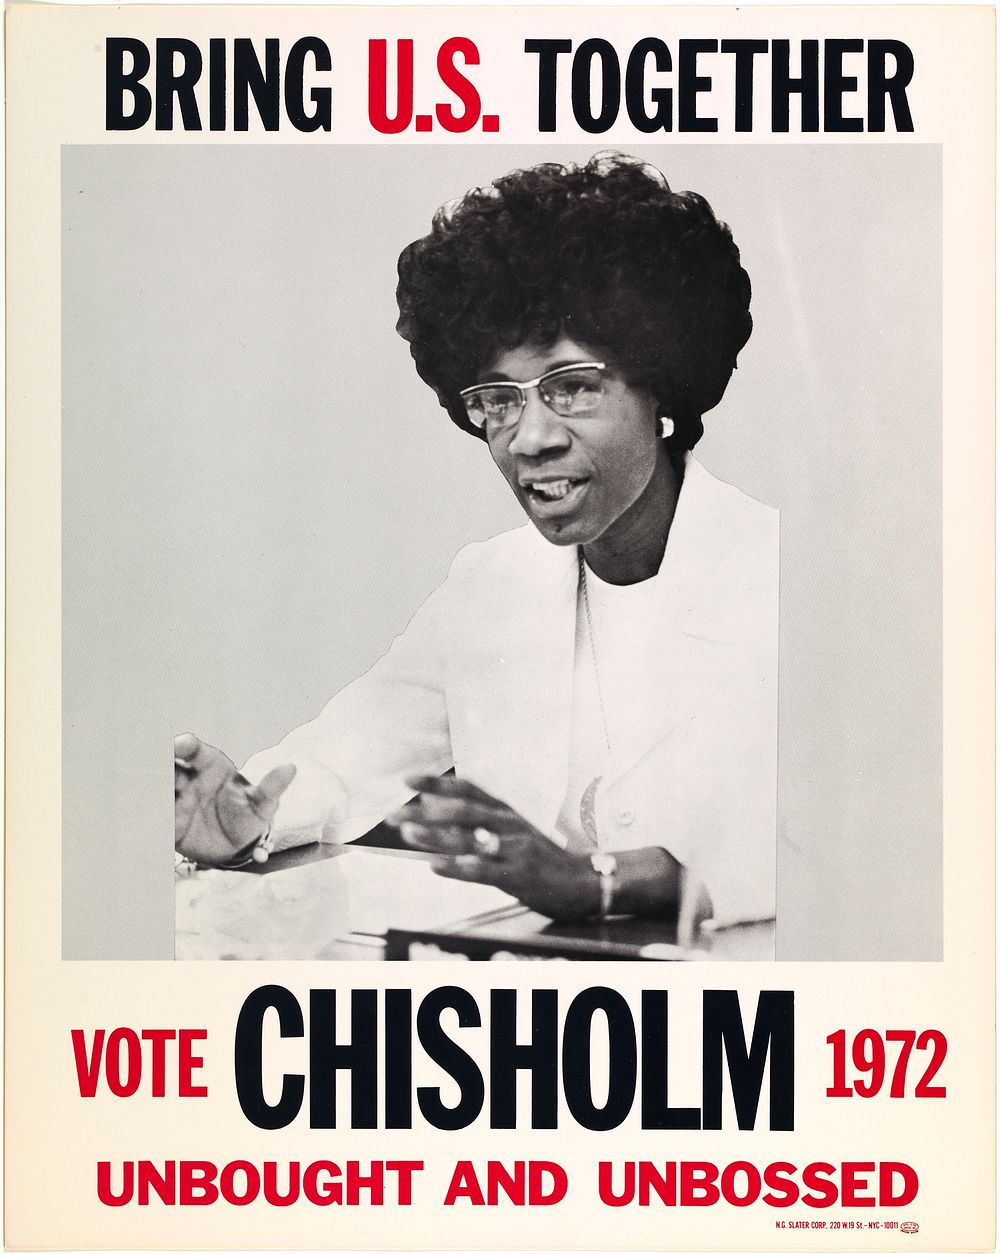 Bring U.S. Together. Vote Chisholm 1972, Unbought and Unbossed